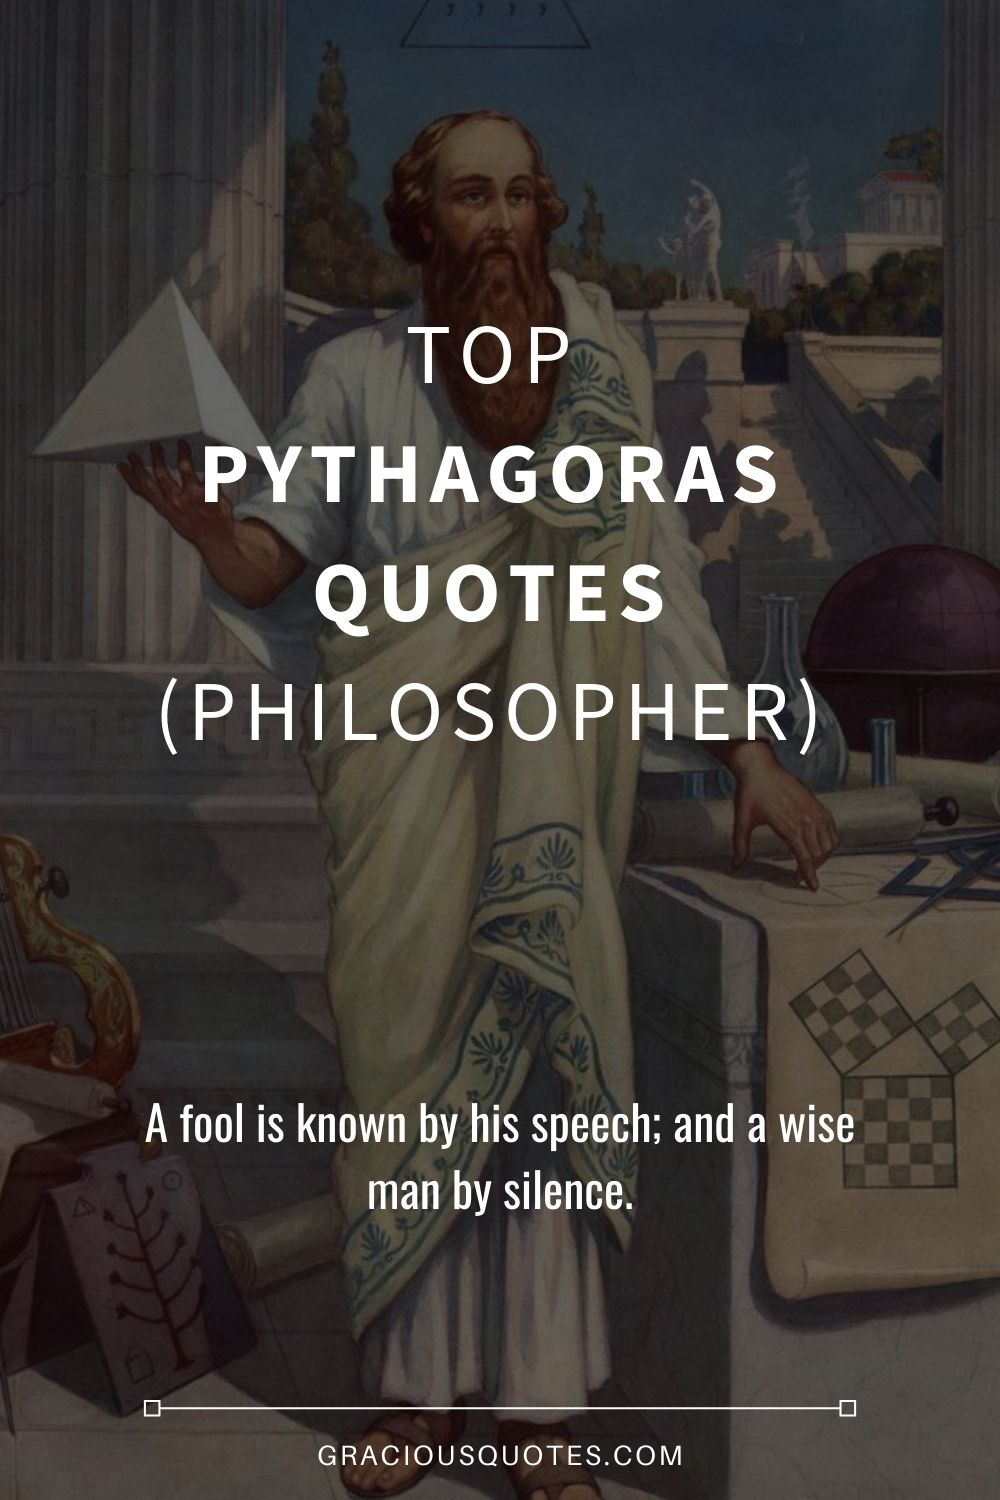 Top Pythagoras Quotes (PHILOSOPHER) - Gracious Quotes